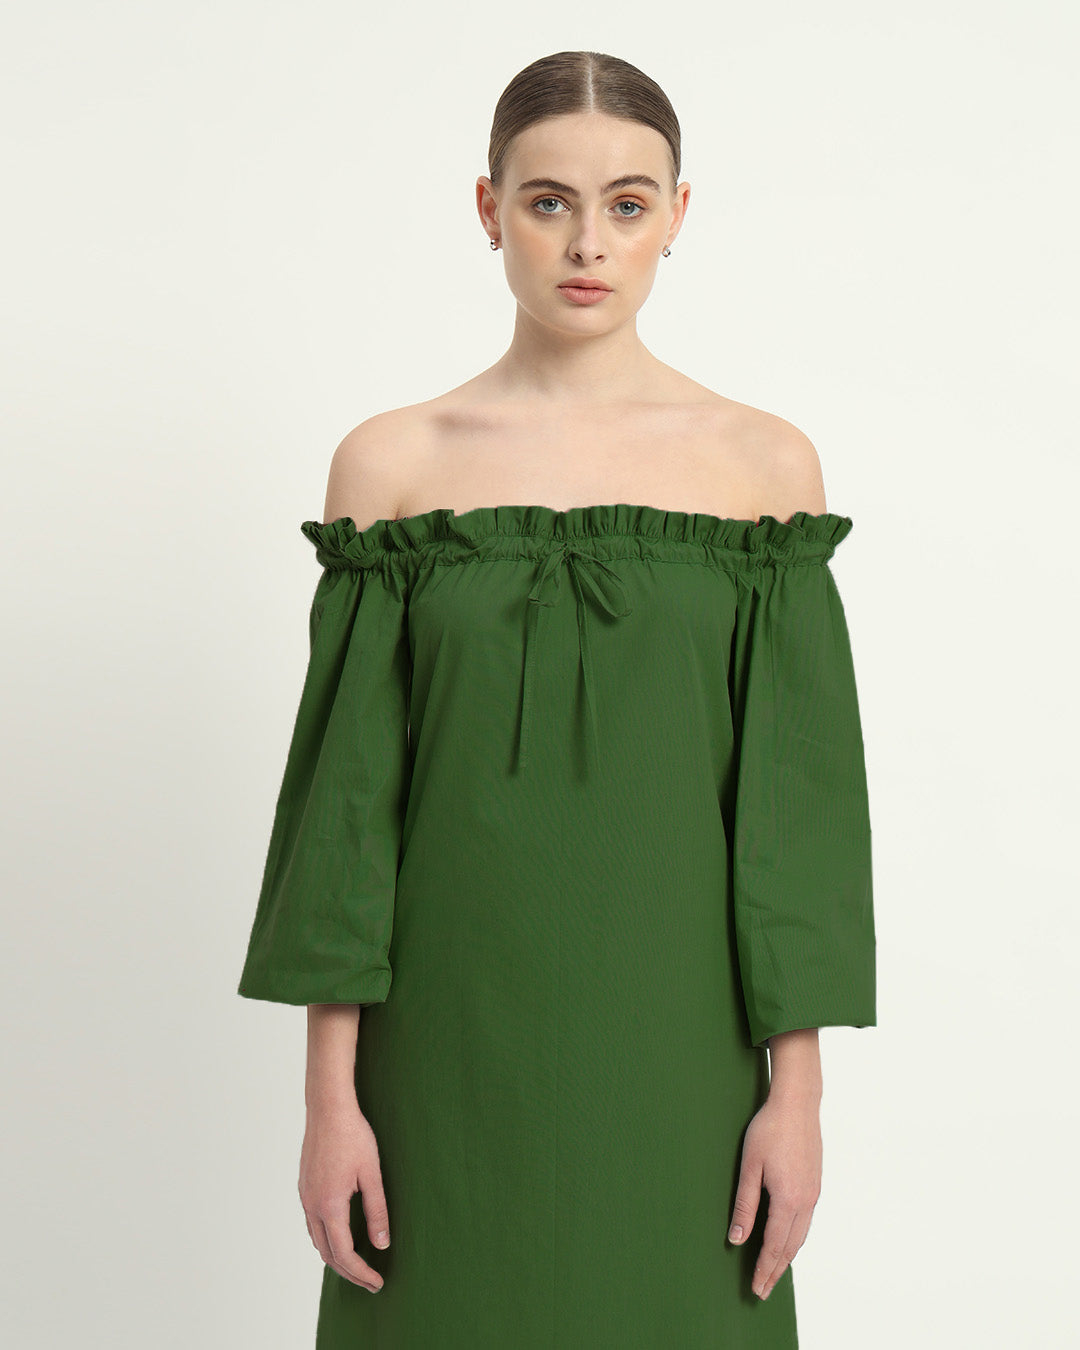 The Emerald Carlisle Cotton Dress